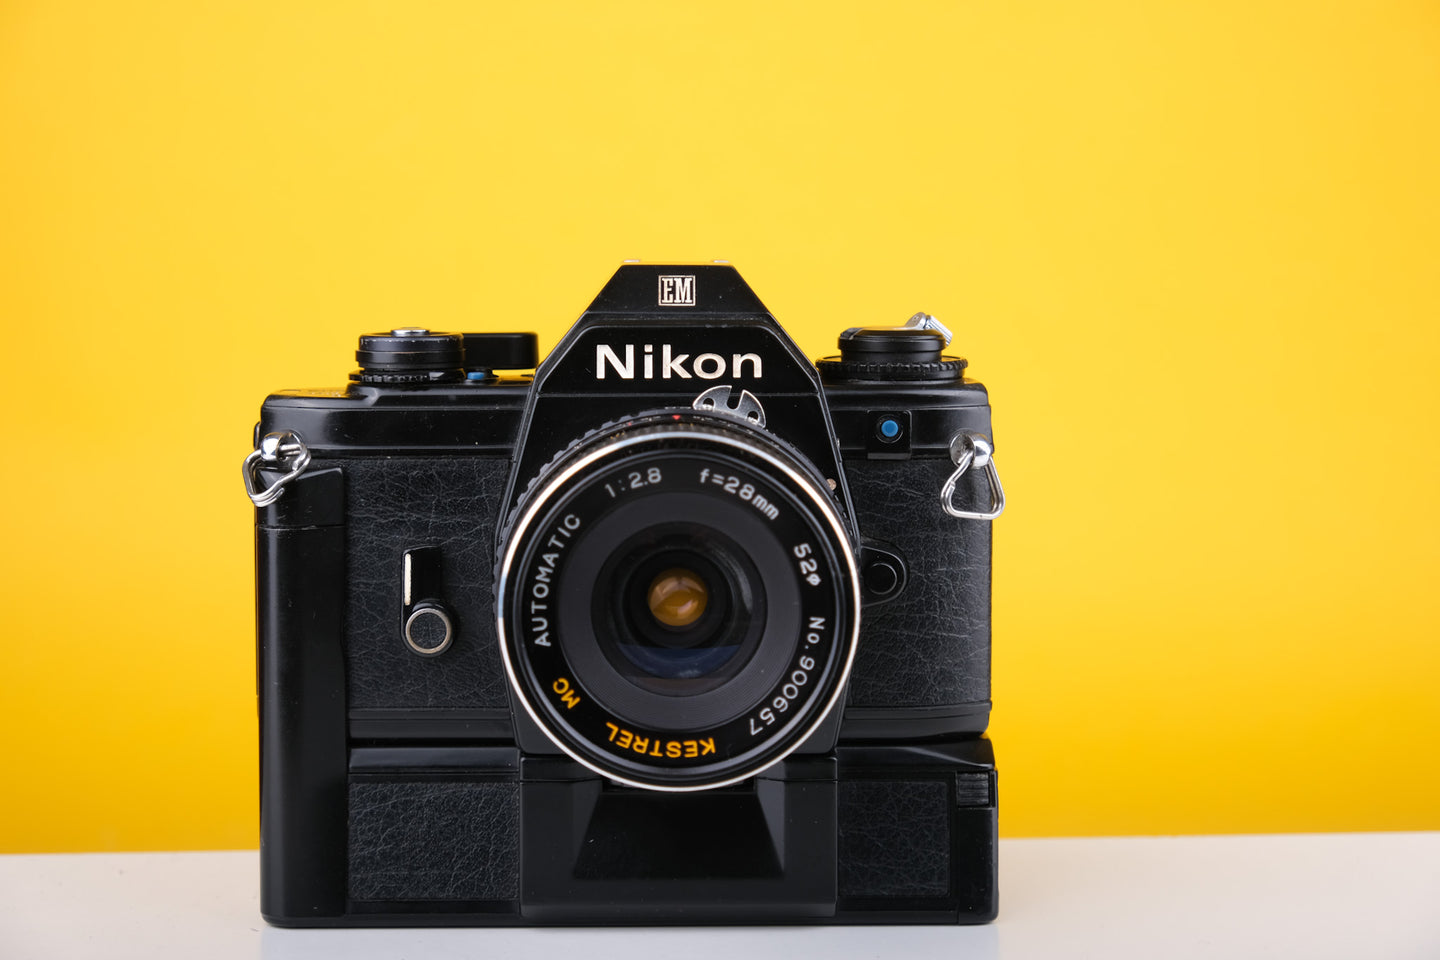  Nikon EM 35mm SLR Film Camera with 28mm lens and Grip